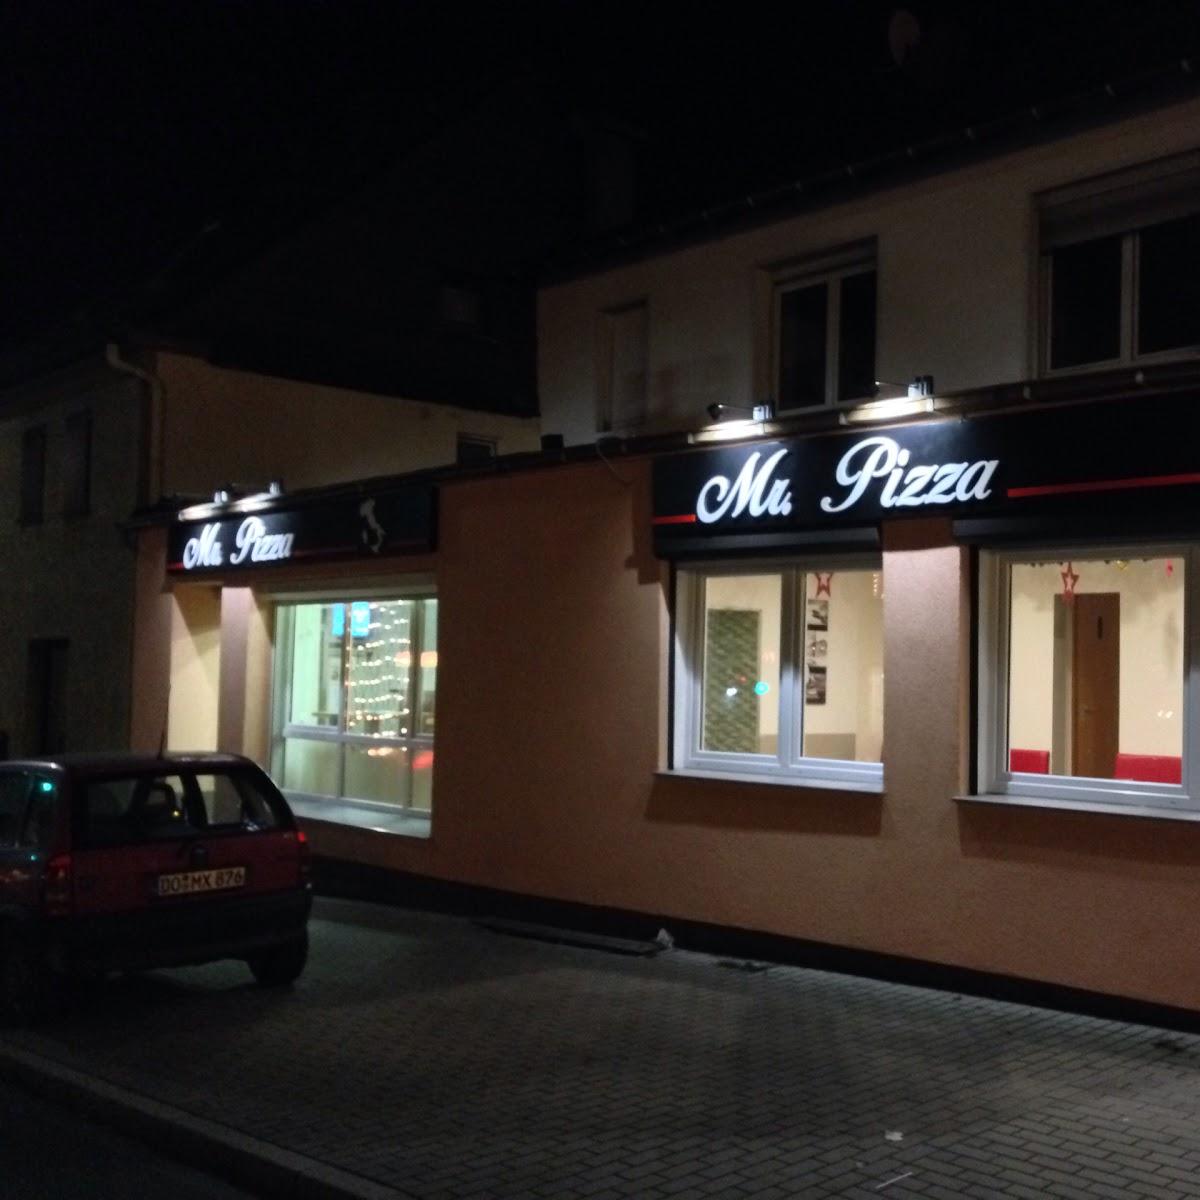 Restaurant "Mr. Pizza" in Dortmund